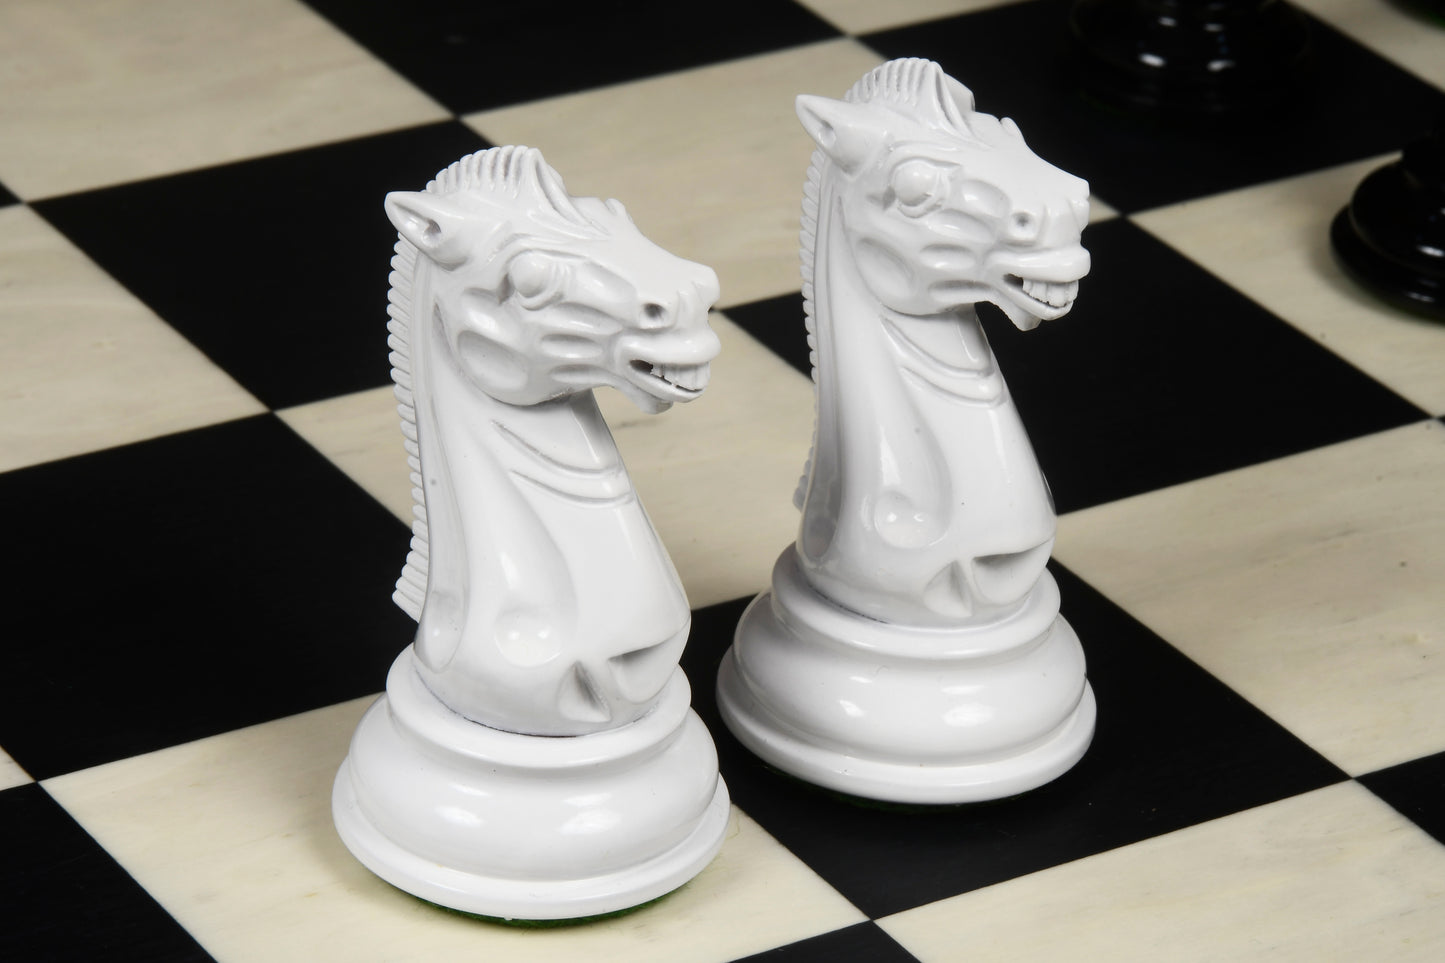 Reproduced 1940 Soviet Club Chess Set in Ebony & Ivory White - 4.0" King